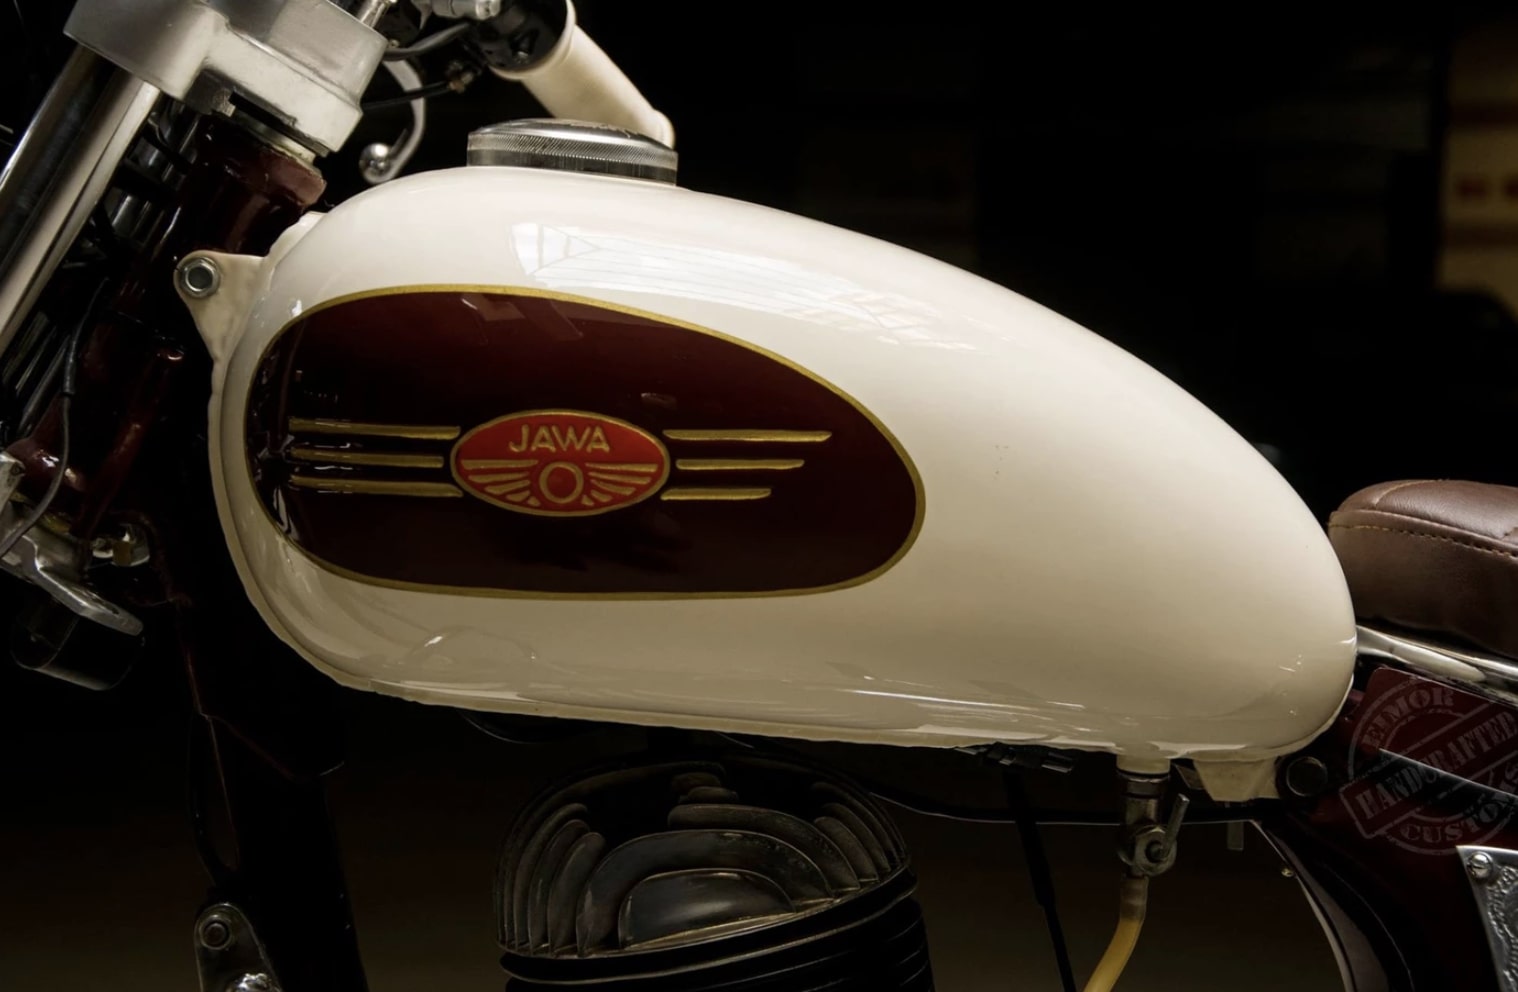 250cc Jawa Classic Motorcycle Quick Details and Live Photos - closeup